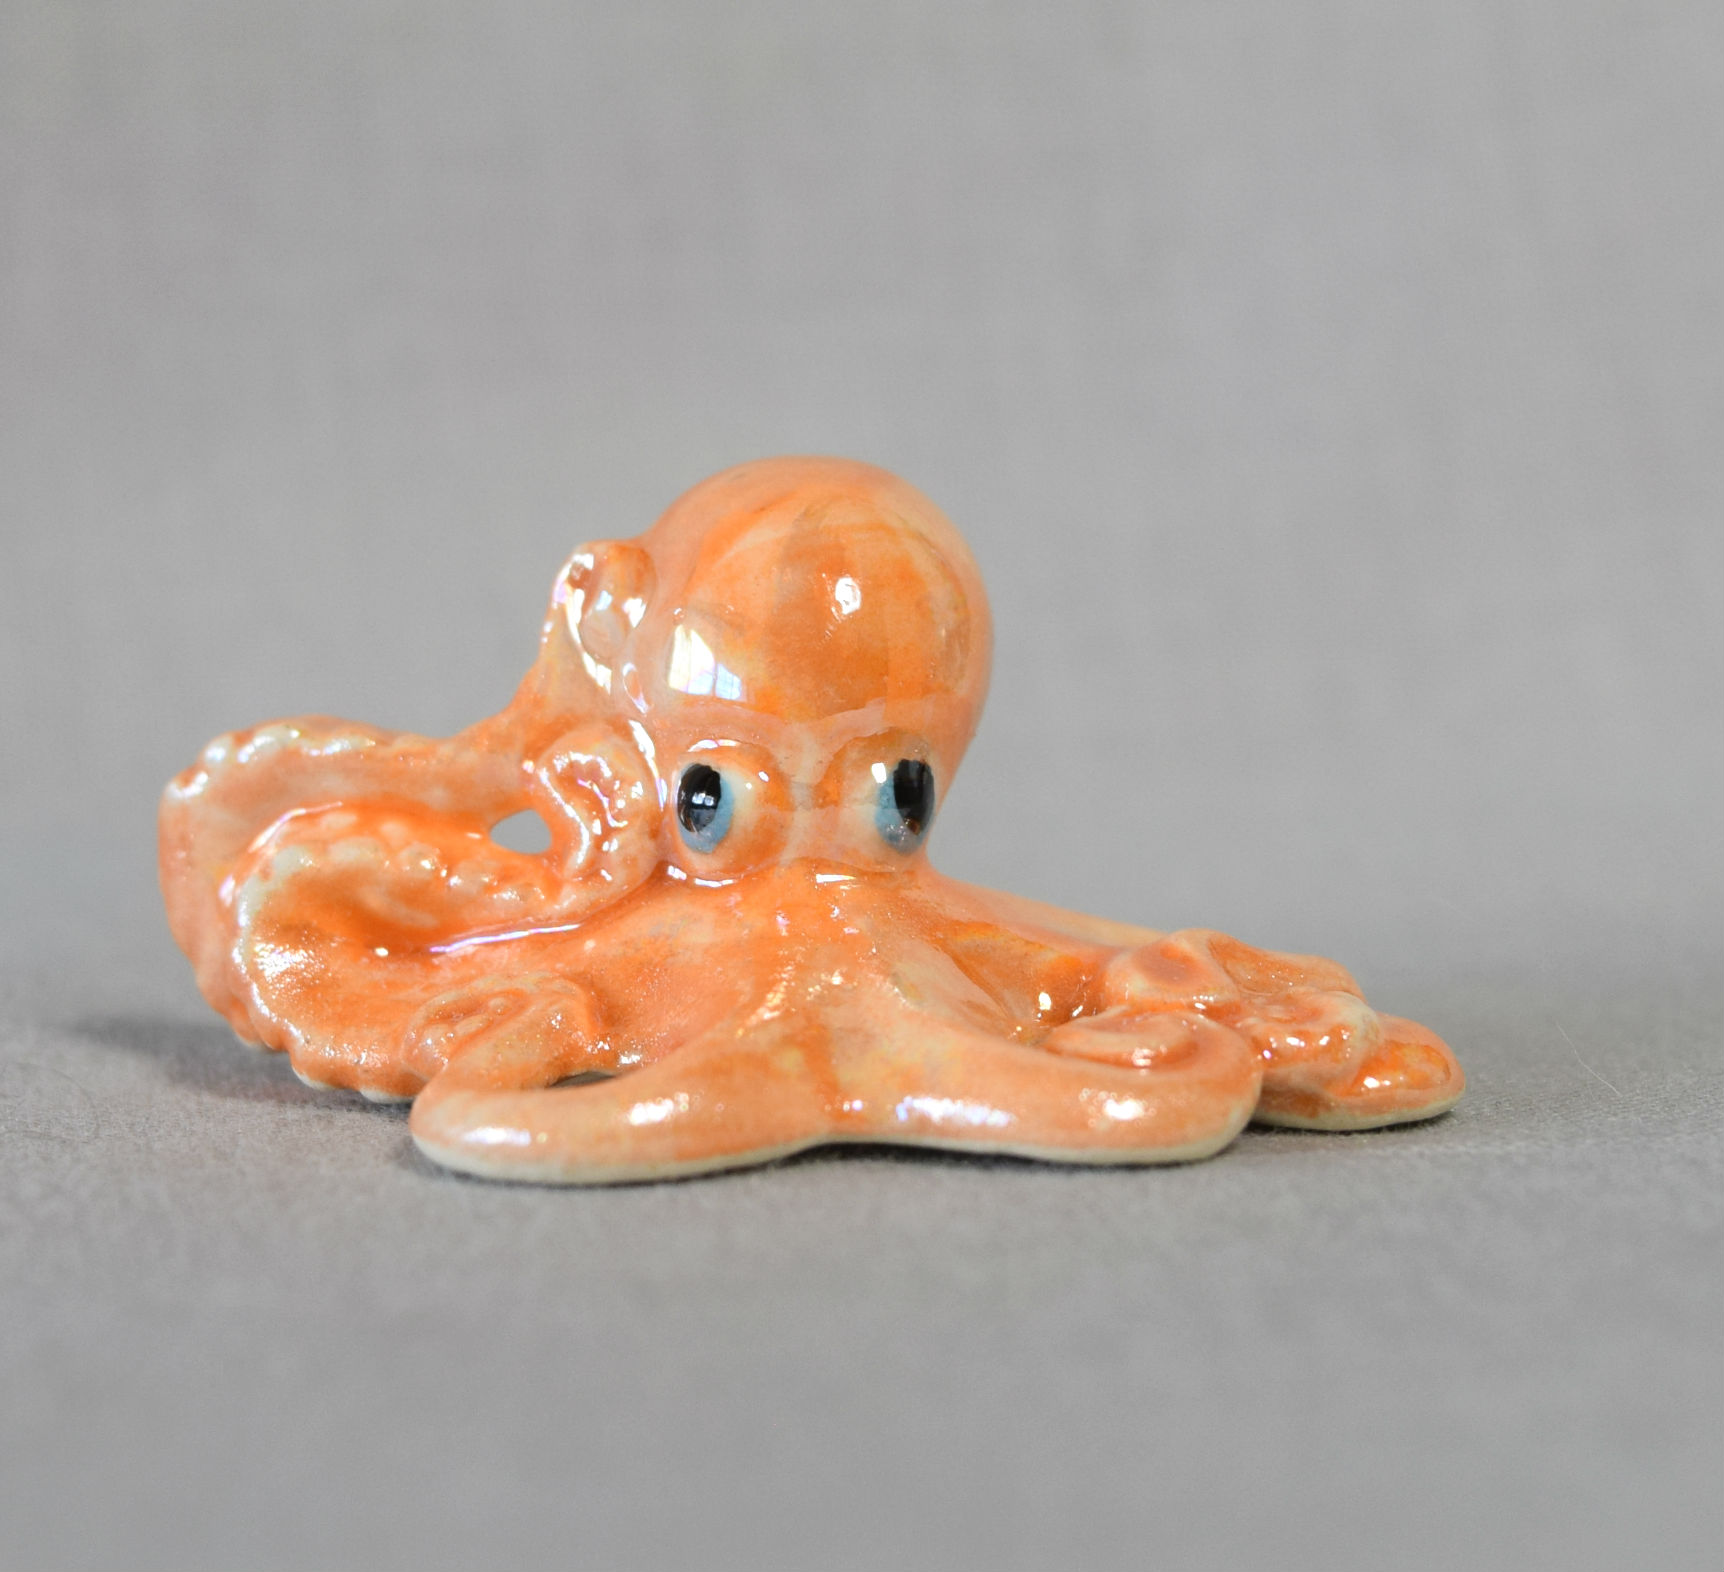 Octopus main image